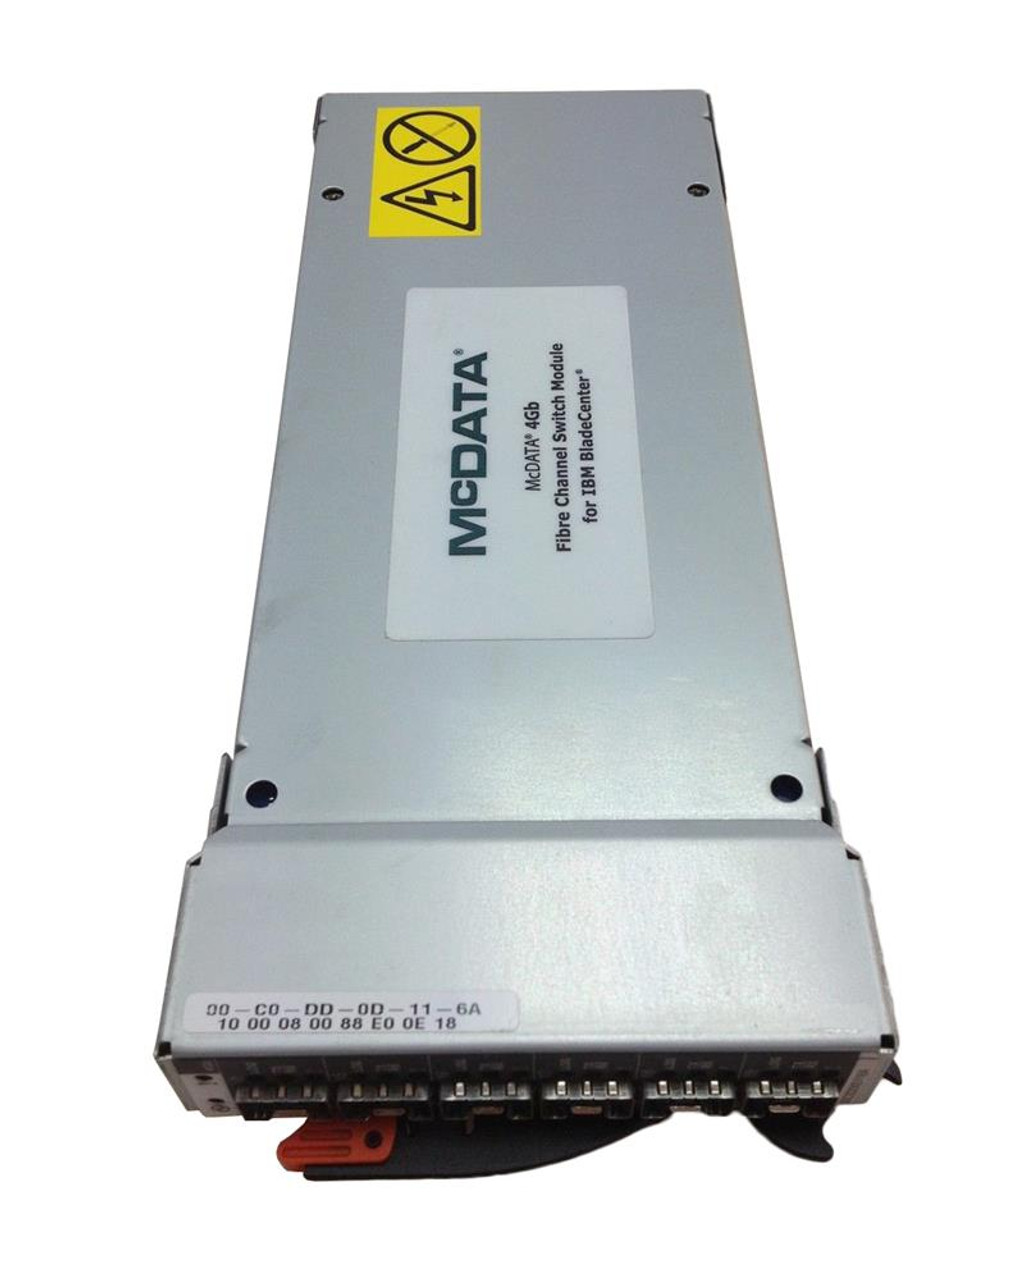 32R1905-08 IBM 4Gb Fibre Channel 10 Port Switch Module by McDATA for BladeCenter (Refurbished)